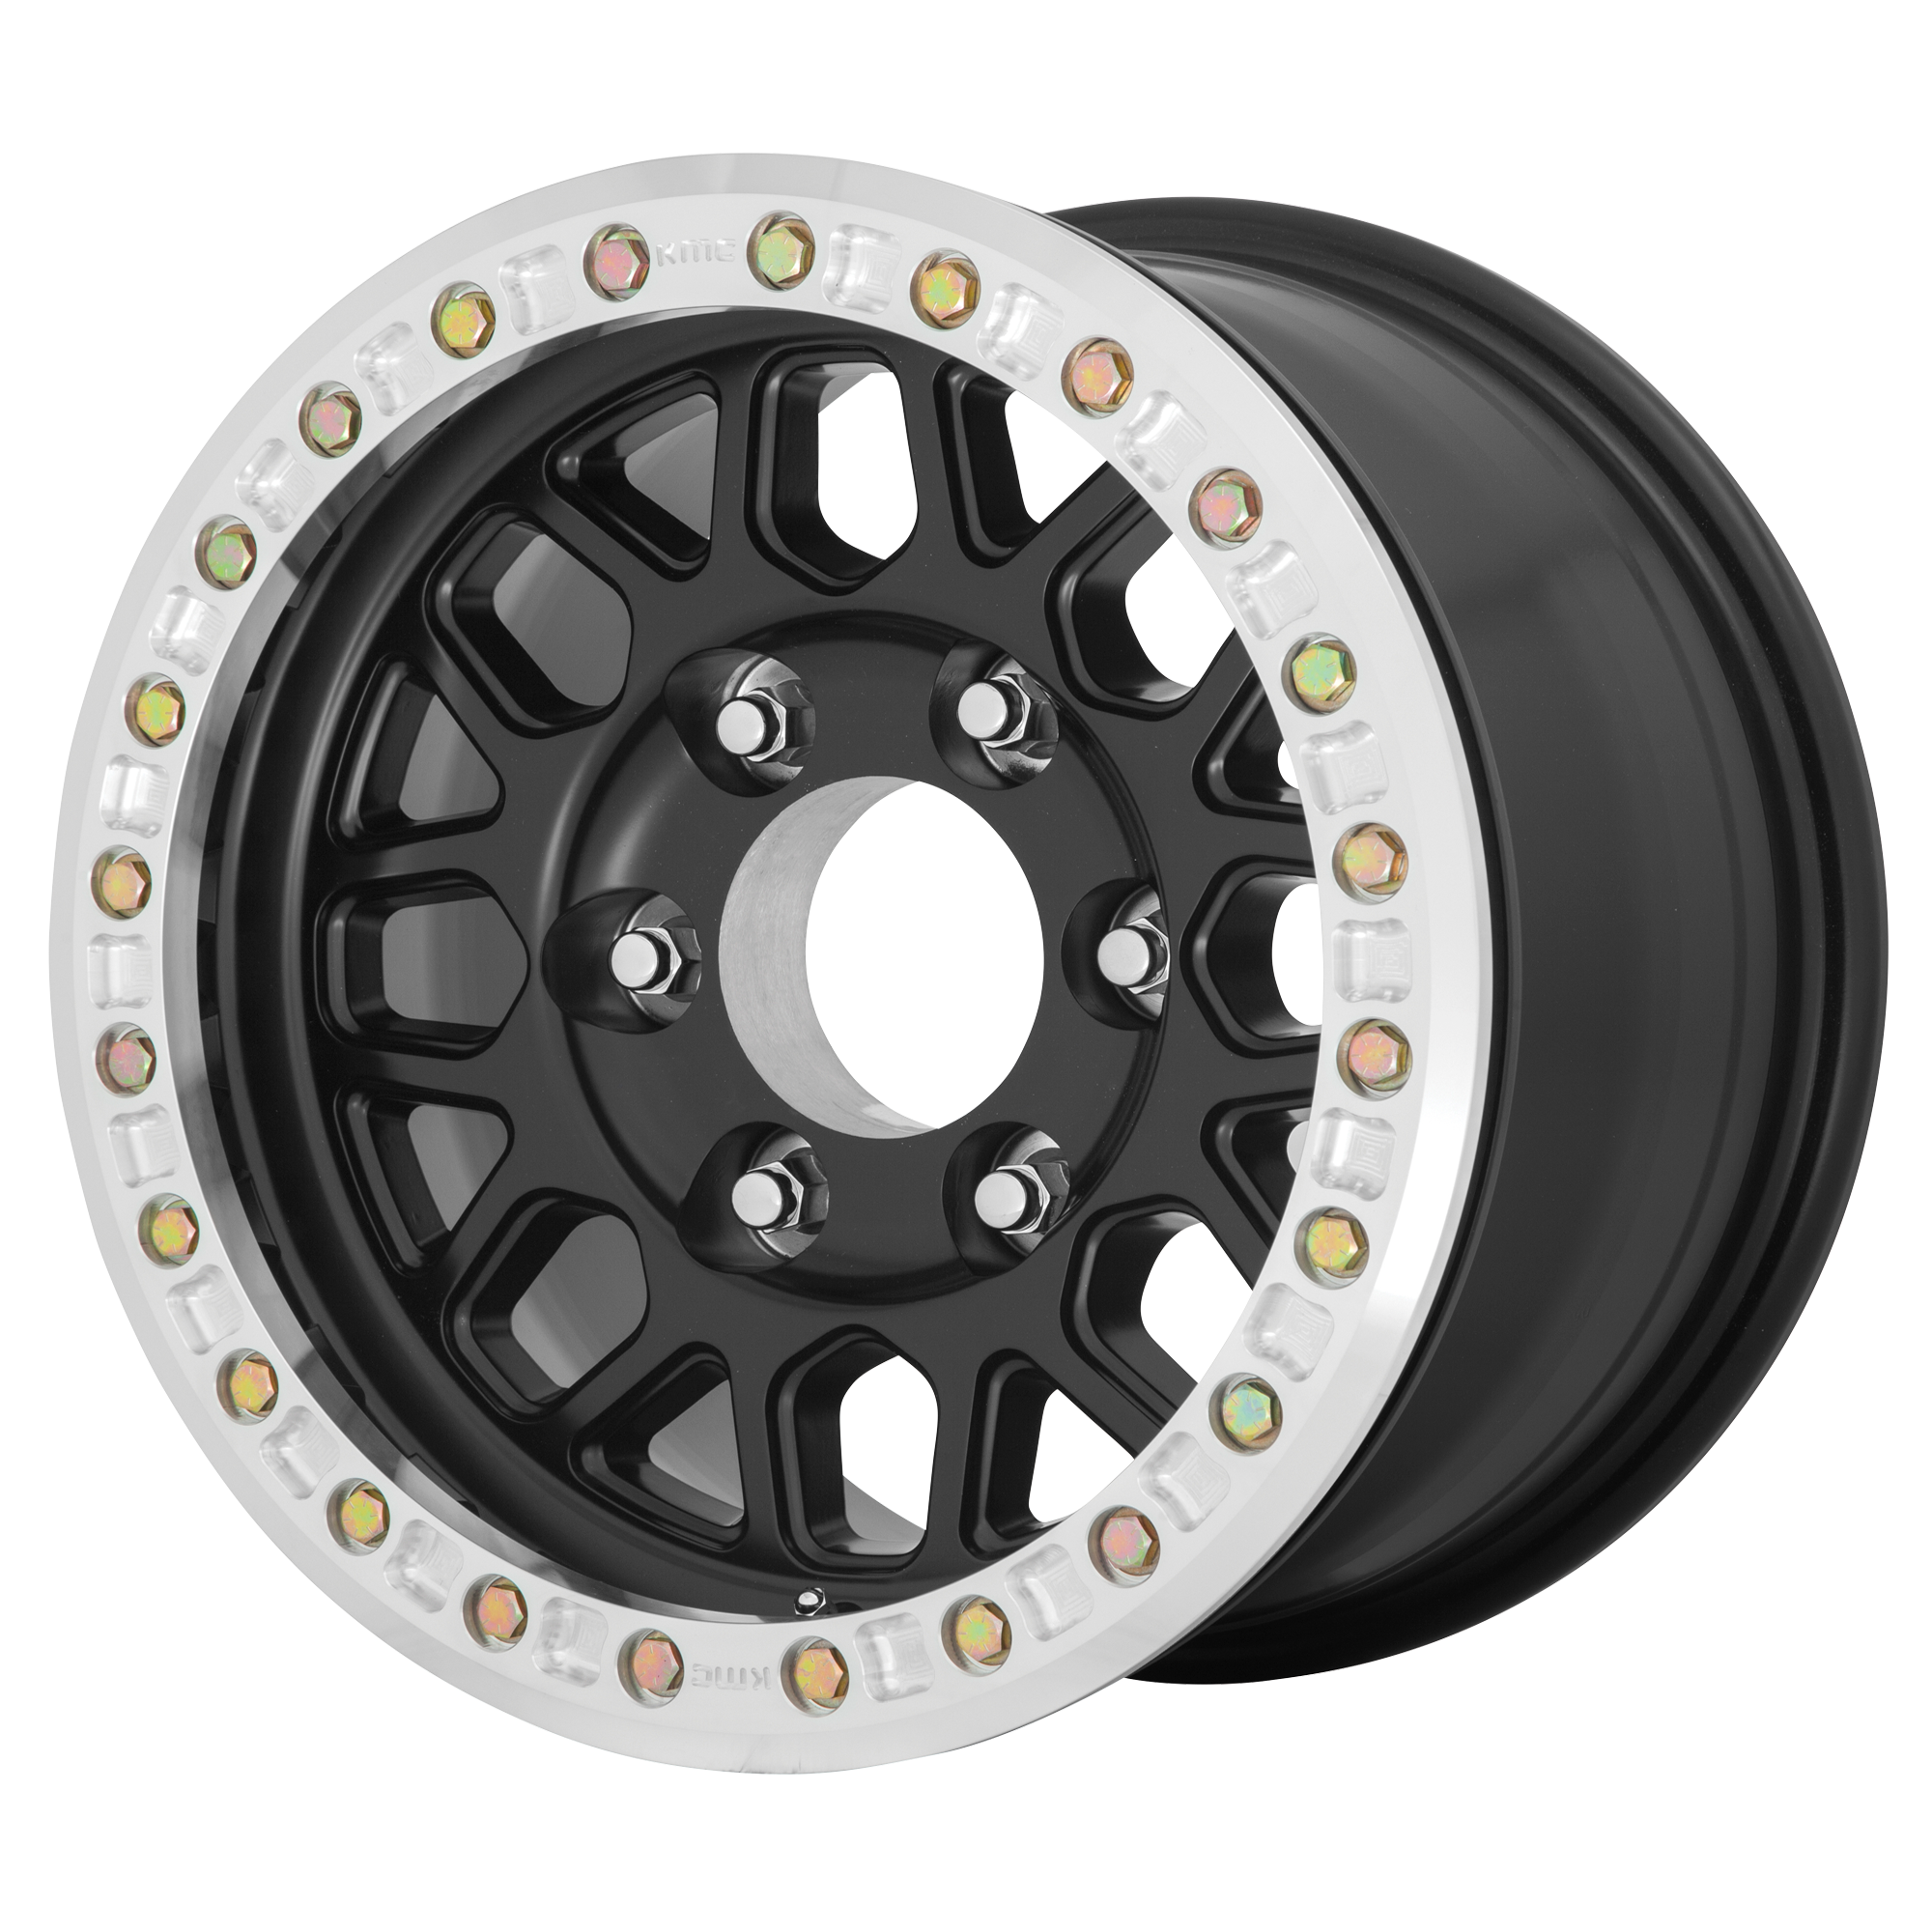 GRENADE DESERT 17x8.5 6x139.70 SATIN BLACK (0 mm) - Tires and Engine Performance